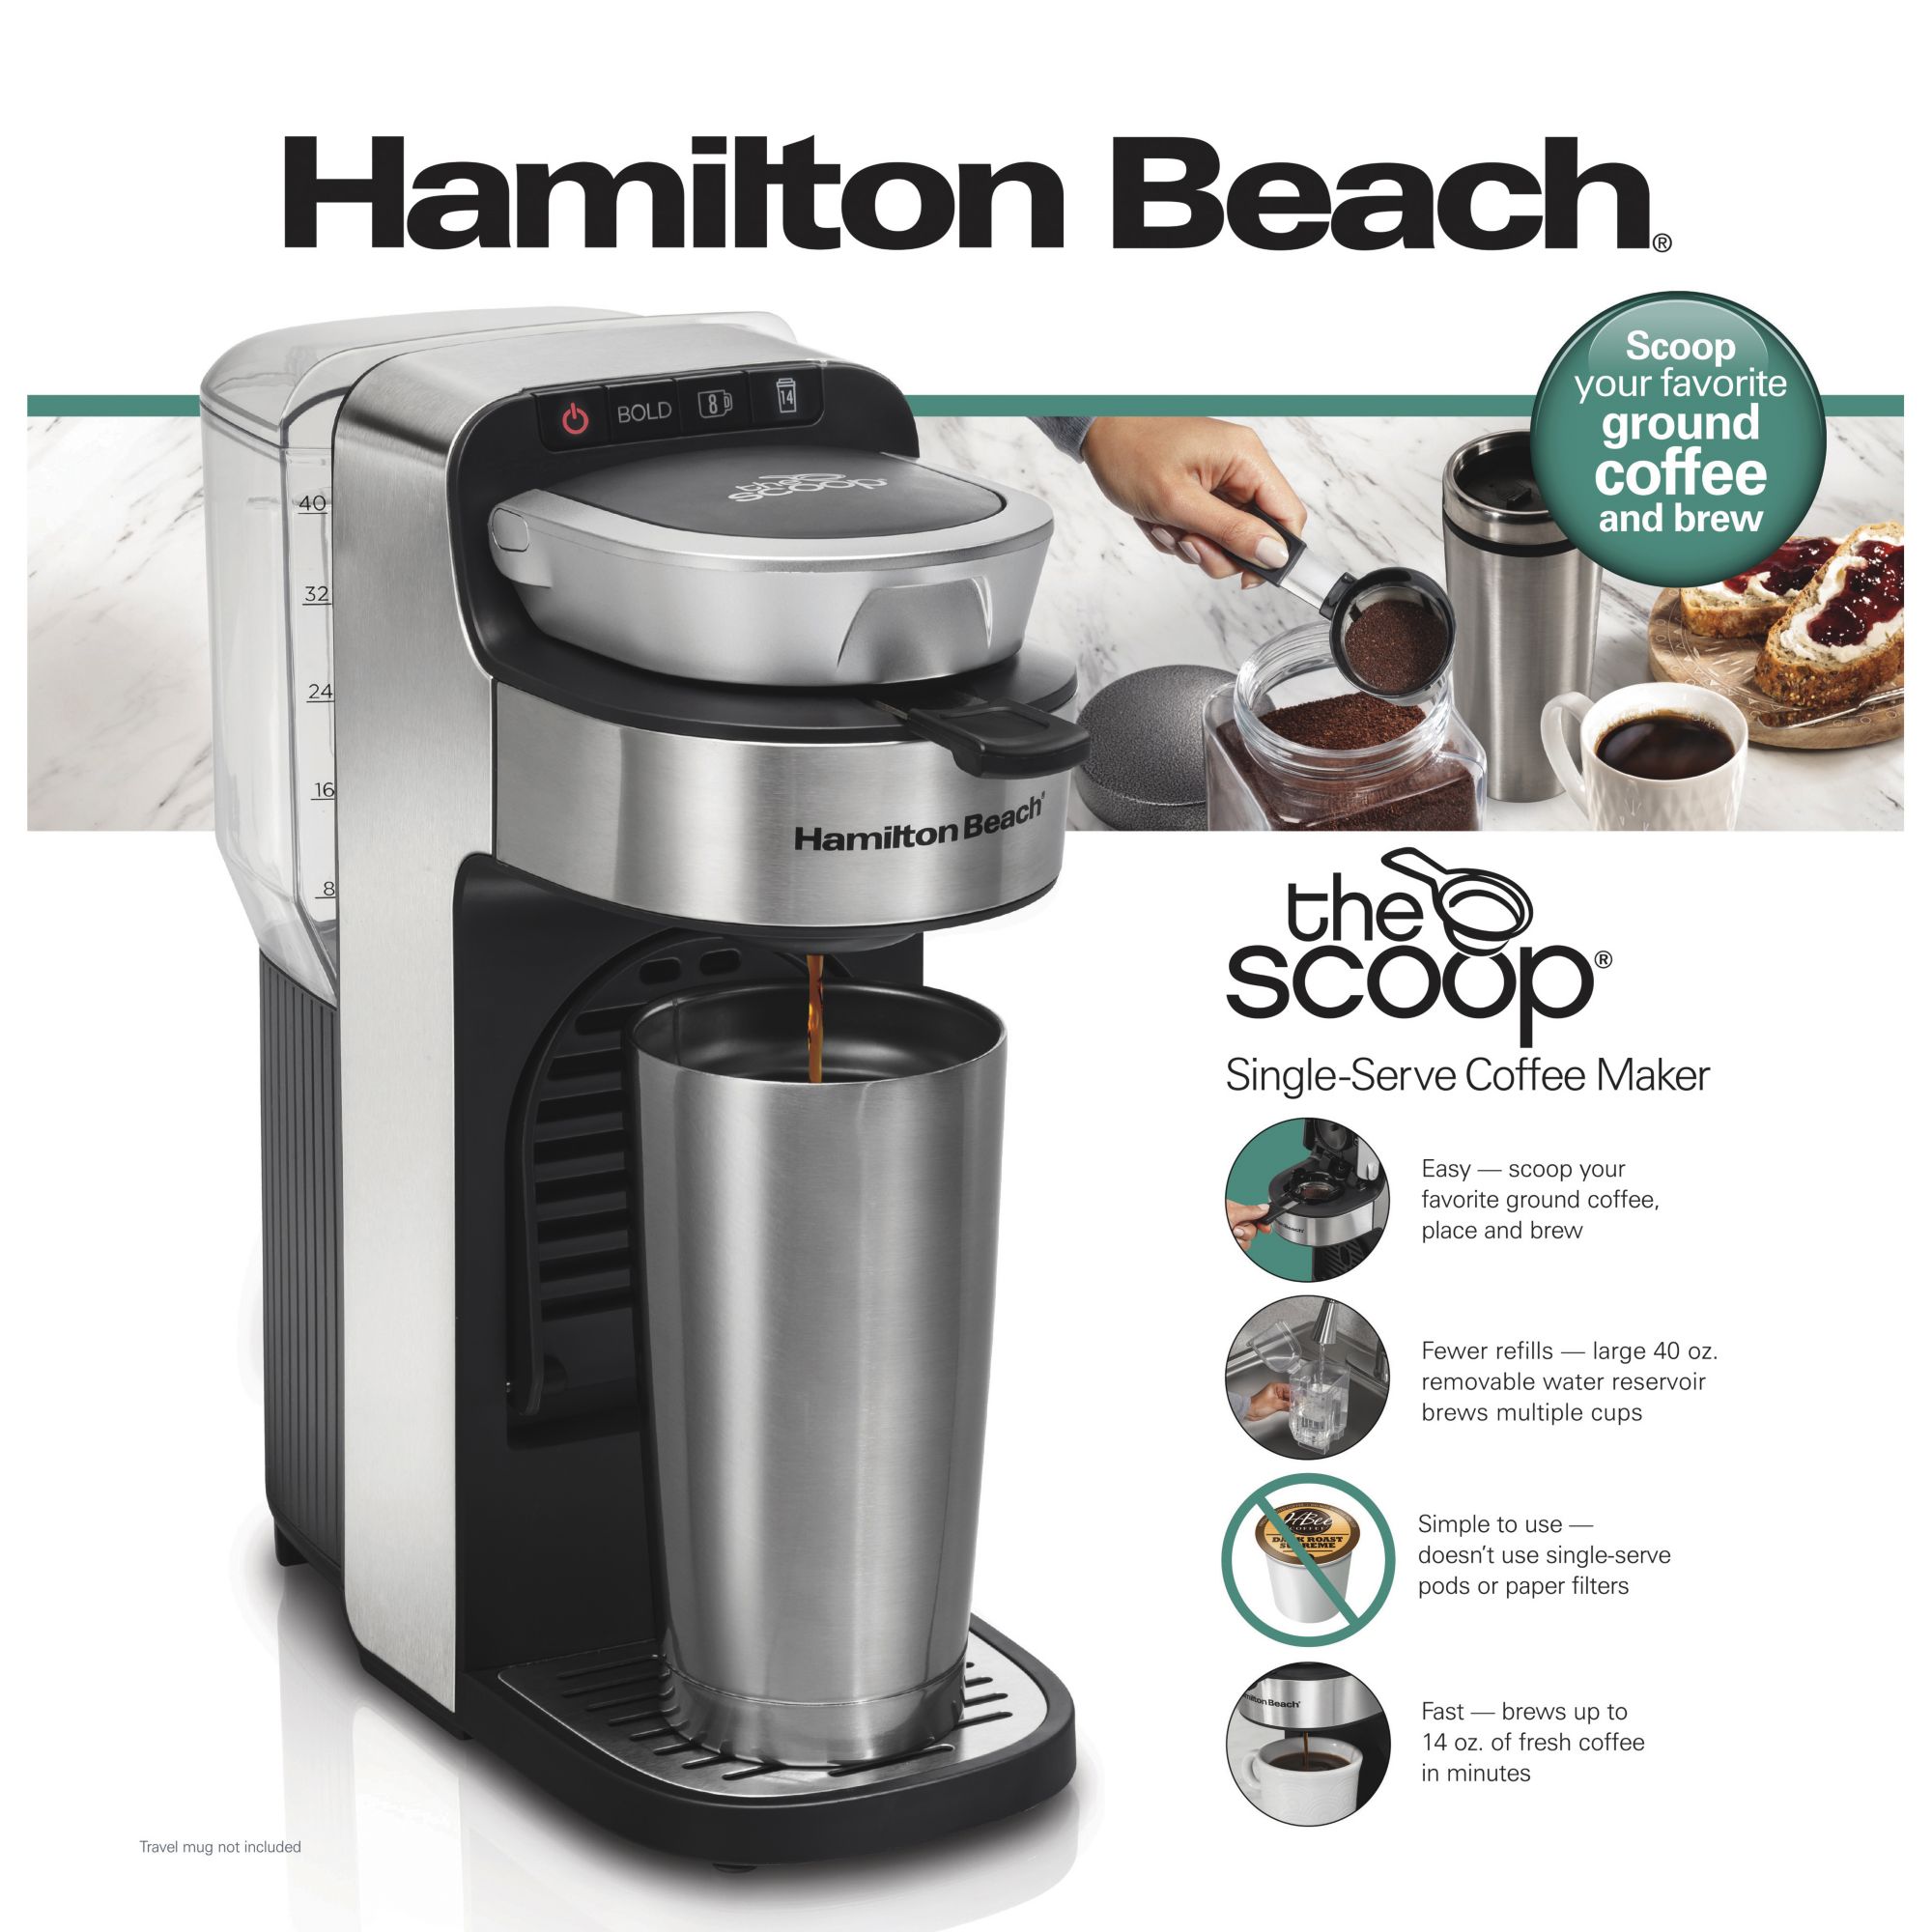 Hamilton Beach The Scoop Single-Serve Stainless Steel Coffee Maker